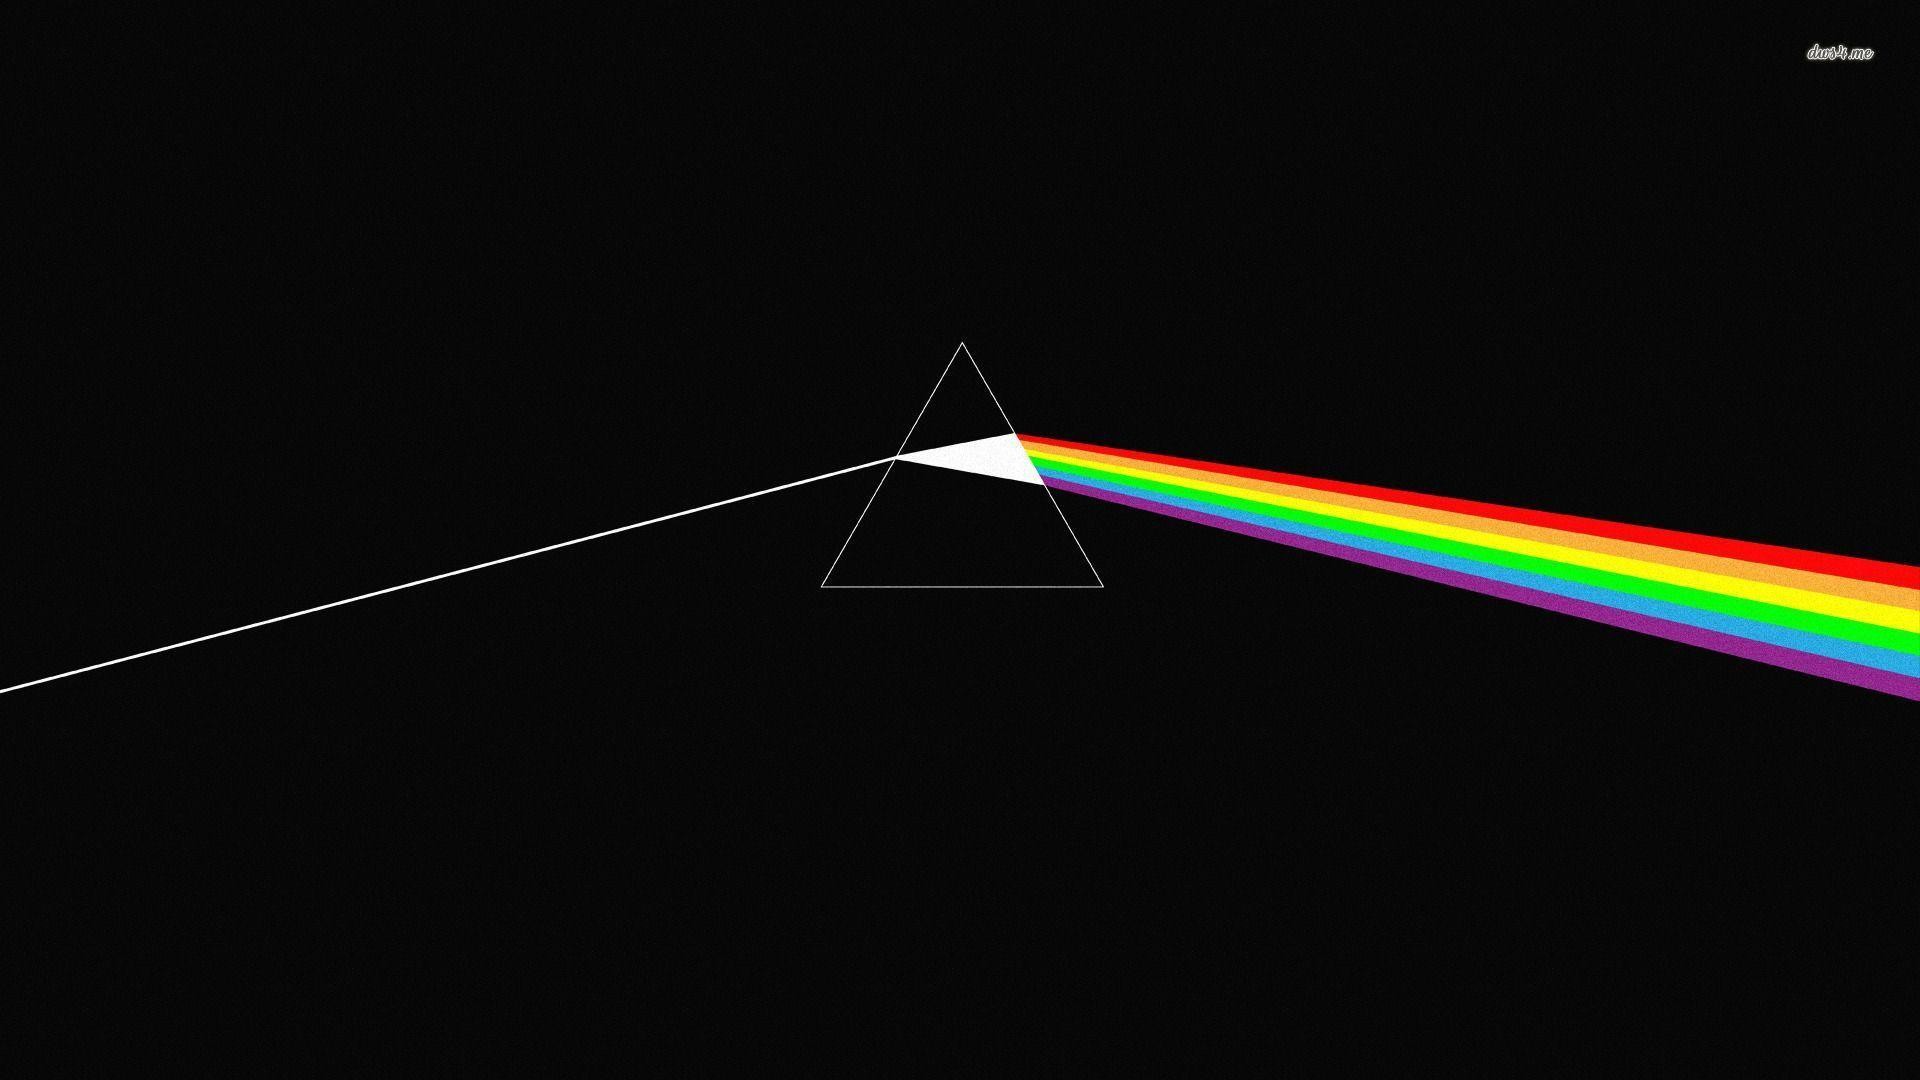 1920x1080 Pink Floyd - Dark Side of the Moon wallpaper - Music wallpapers - #